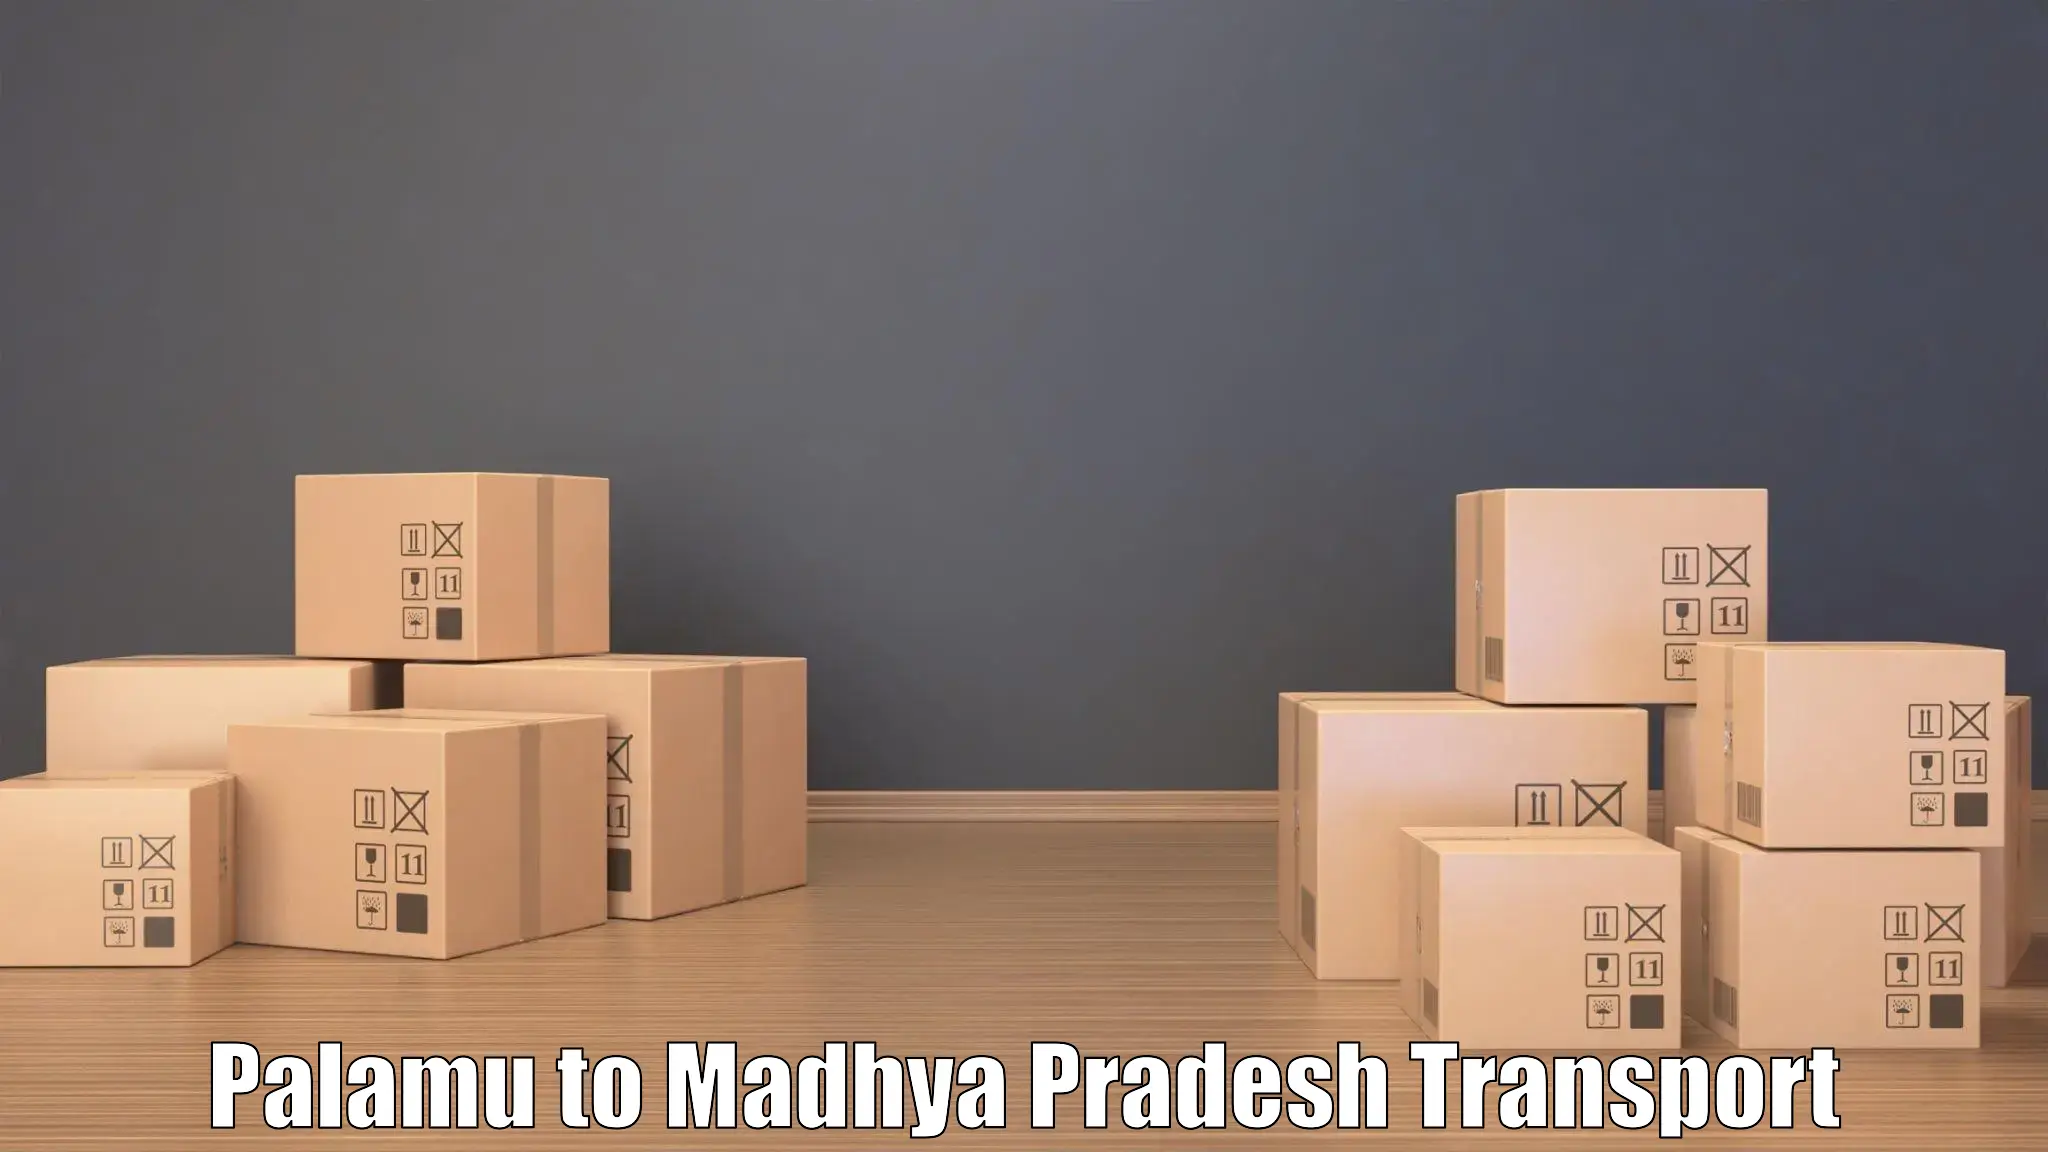 Truck transport companies in India Palamu to Ujjain